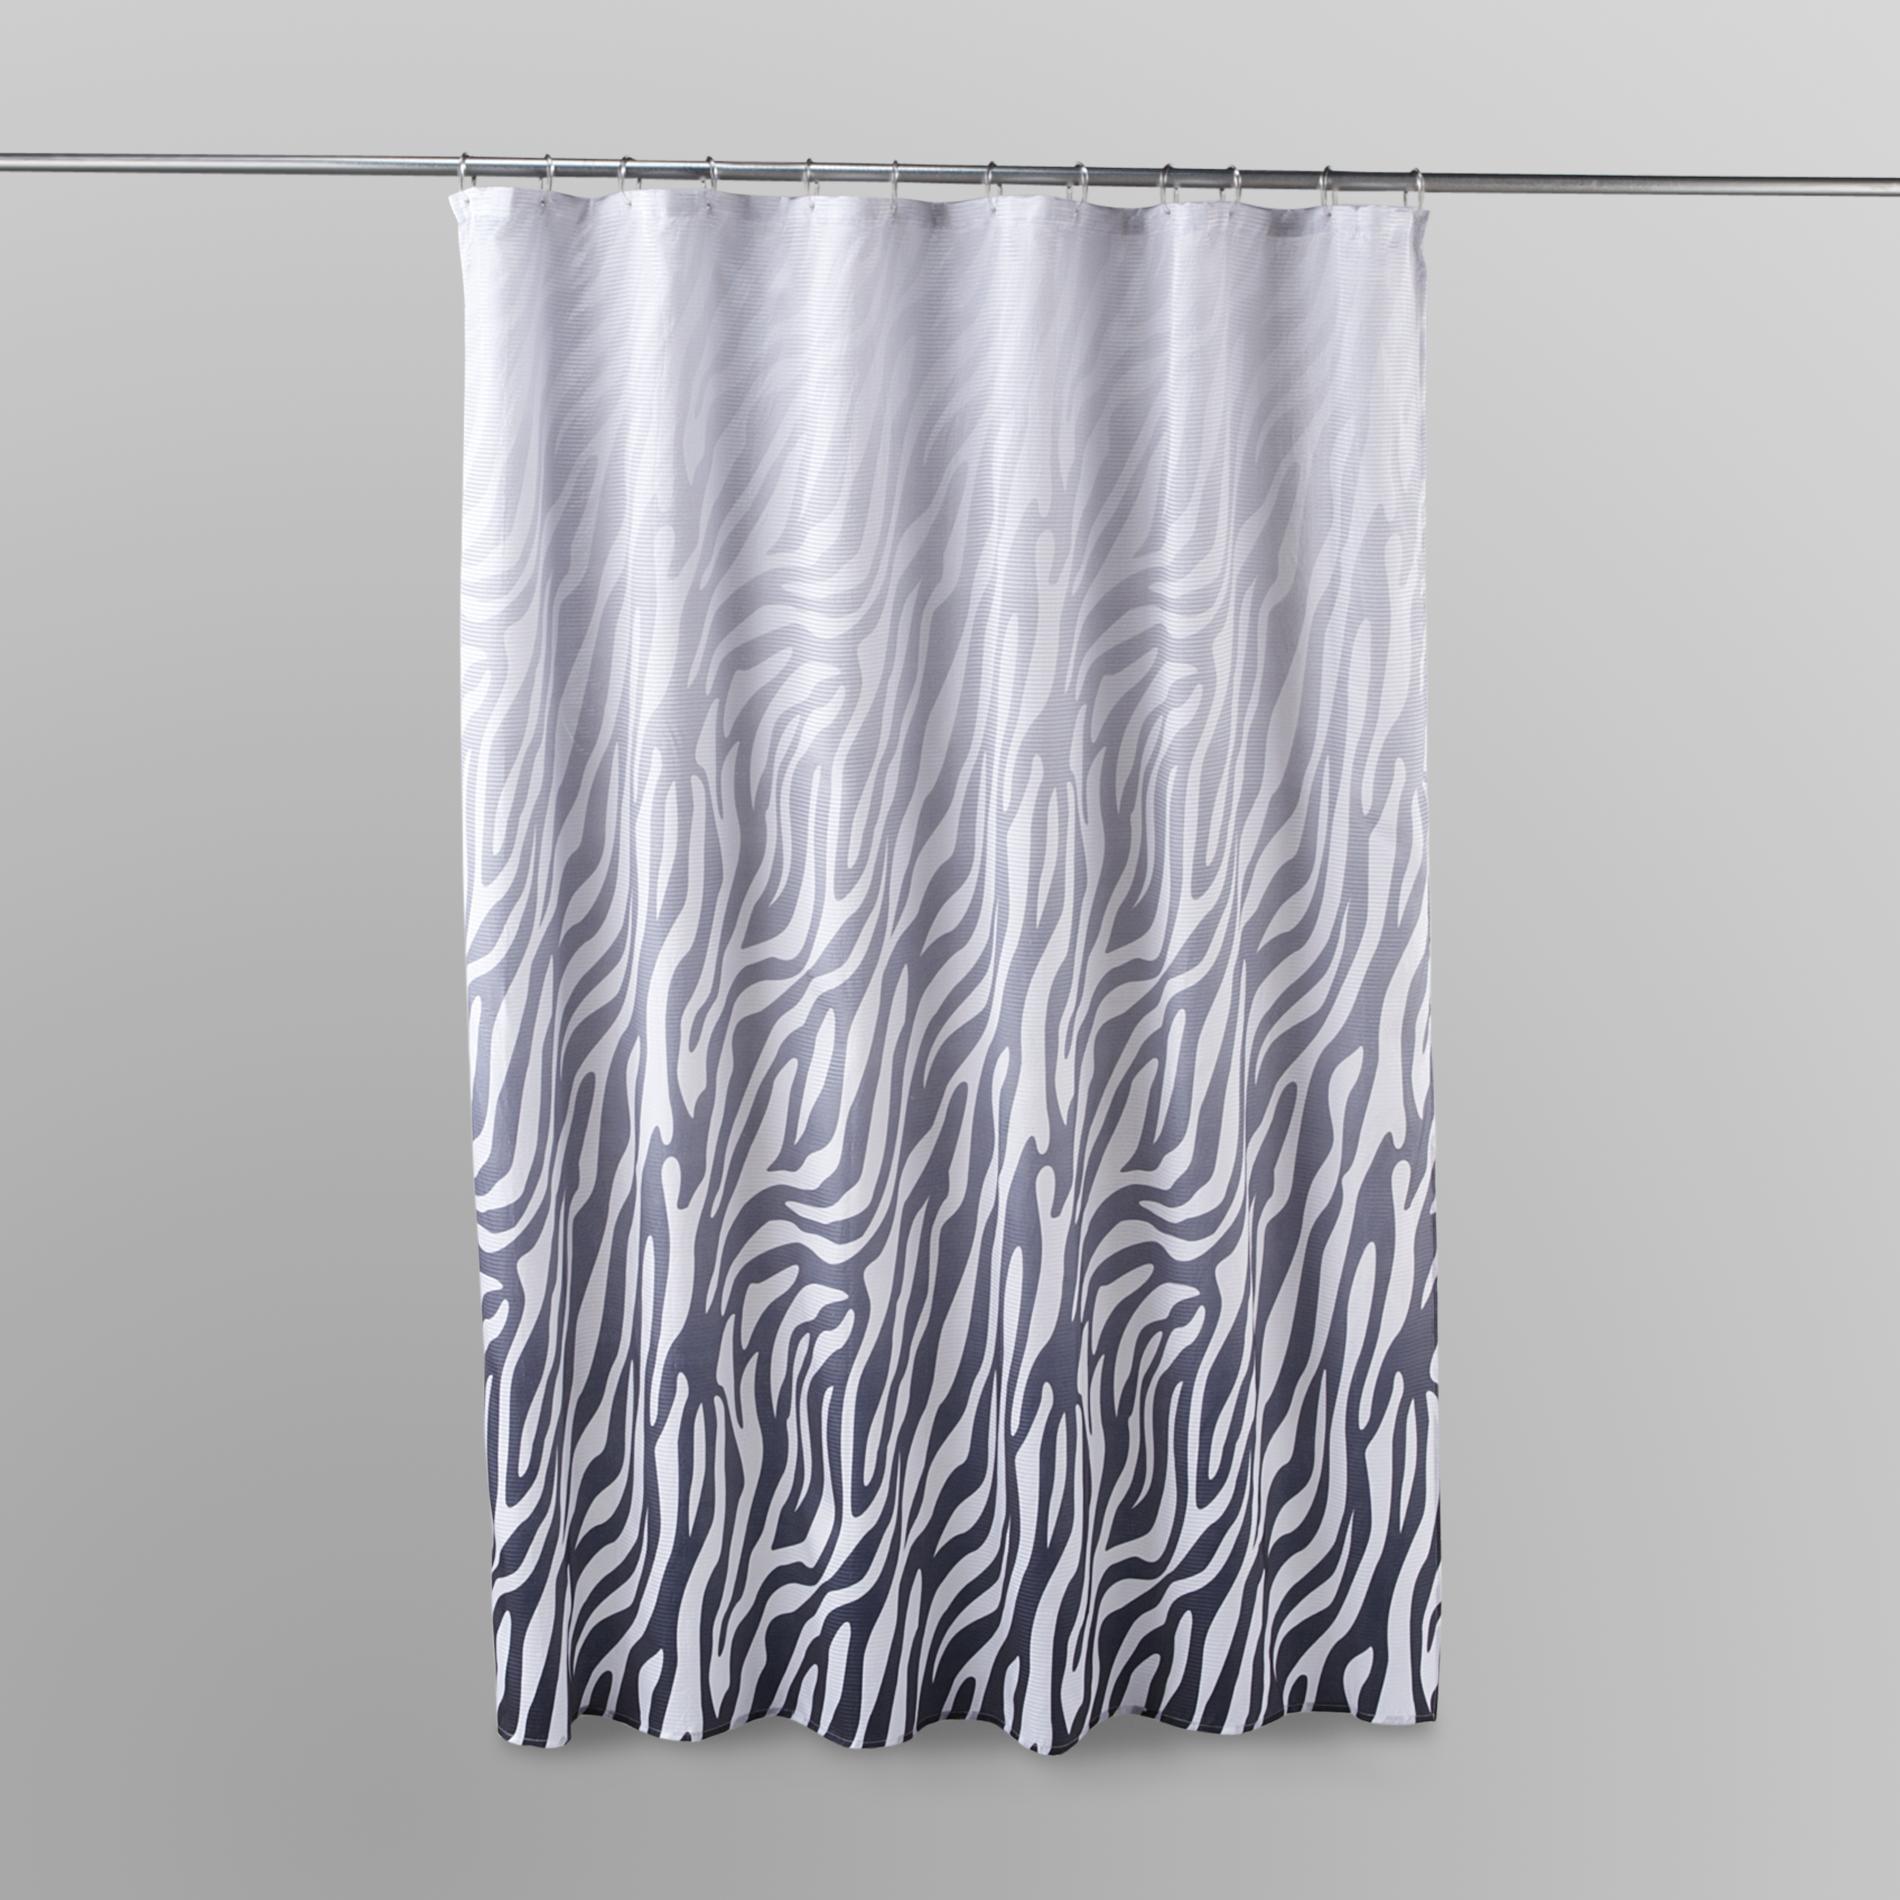 Essential Home Shower Curtain - Ombre Zebra